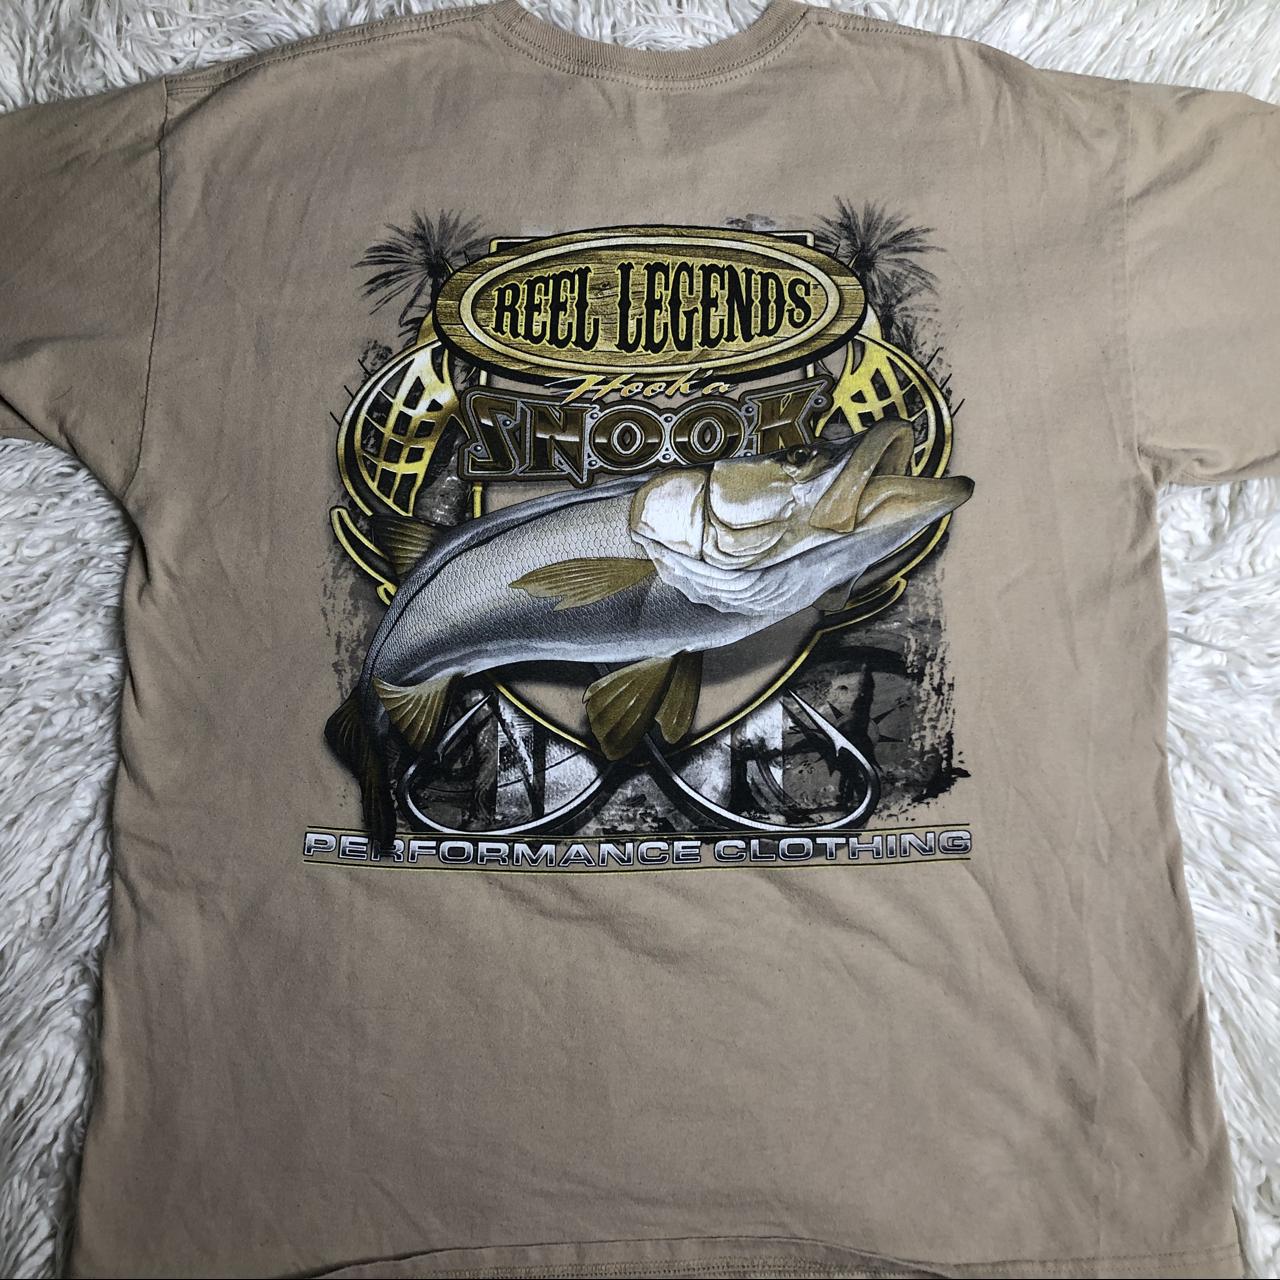 Reel Legends fishing T-shirt - Size XL - SUPER cute - Depop